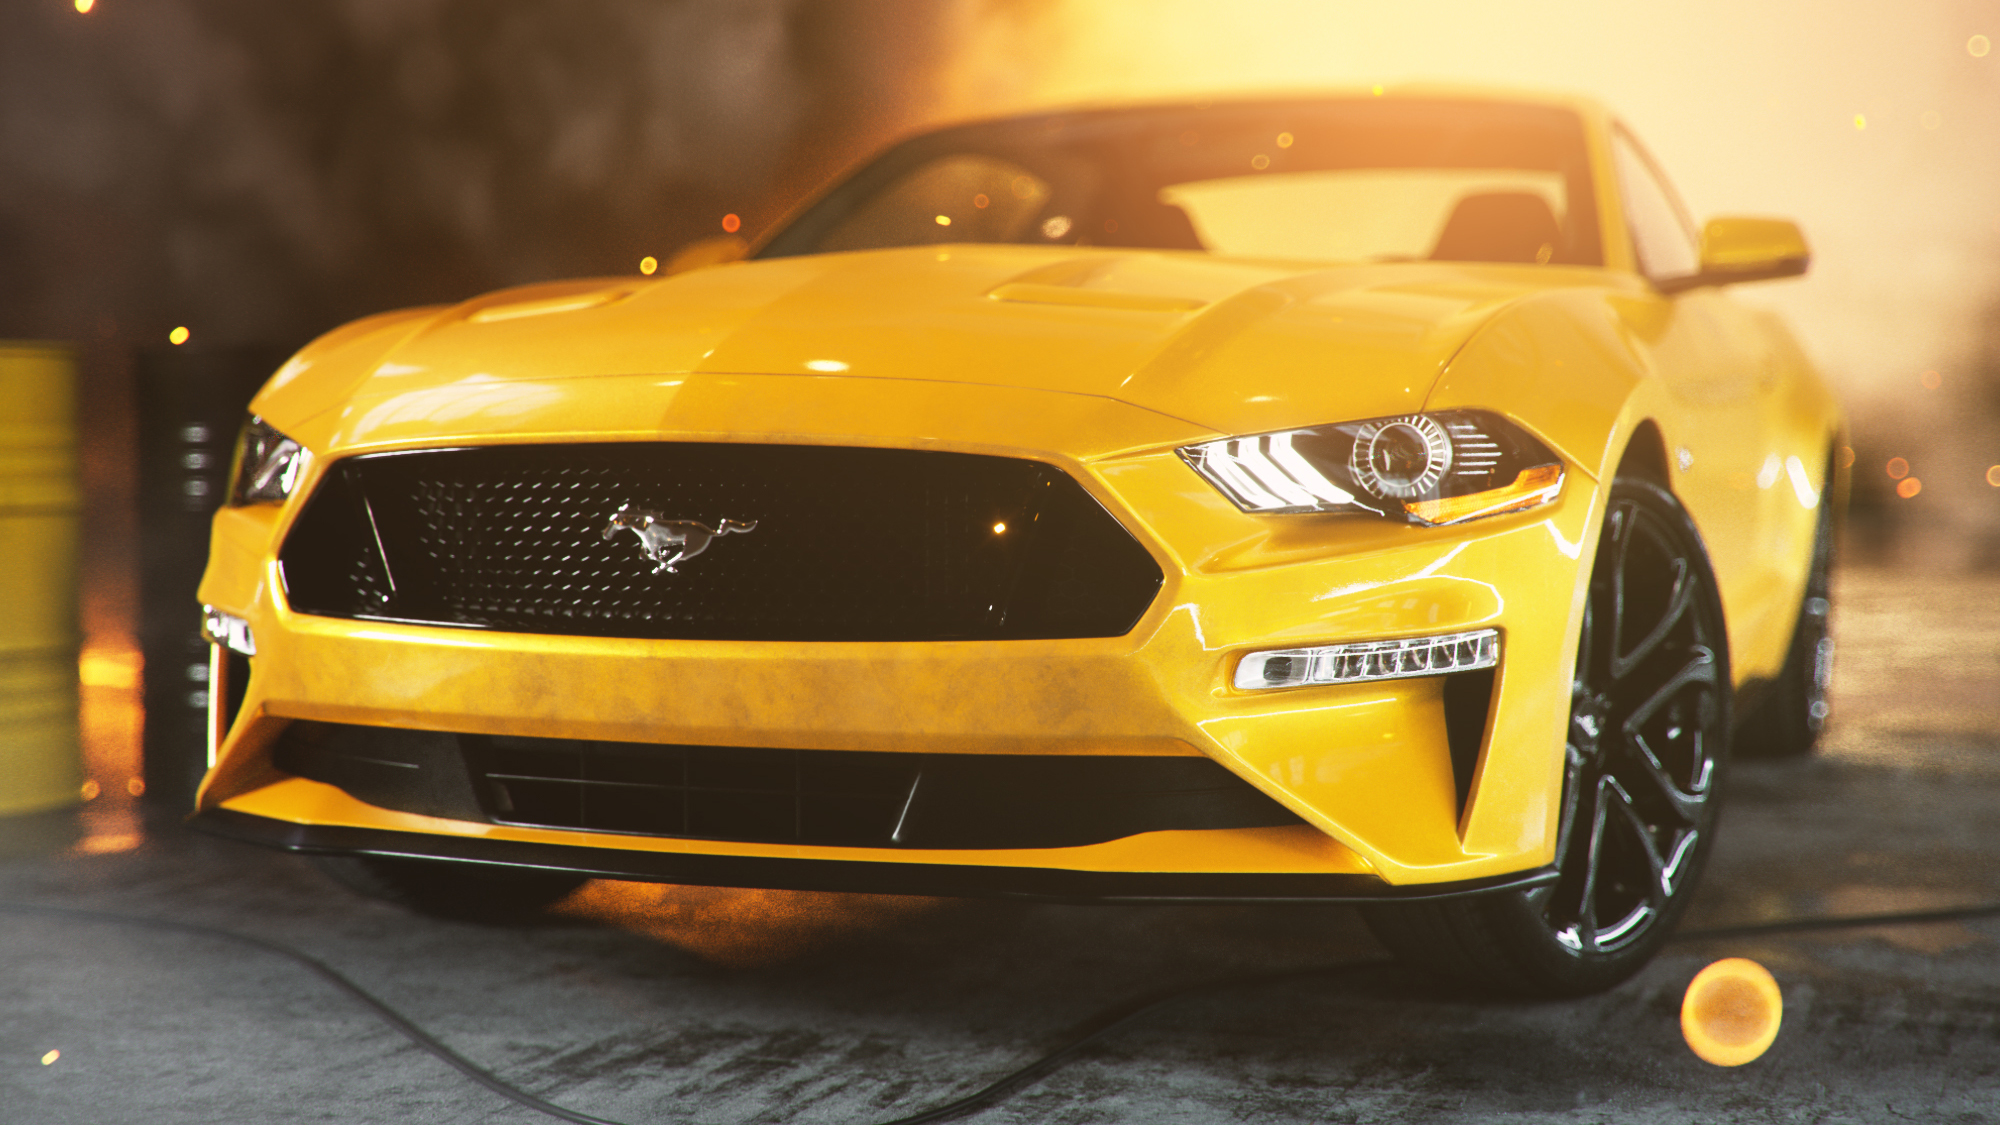 Ford Mustang Yellow Wallpaper Hd 2000x1125 Wallpaper Teahub Io